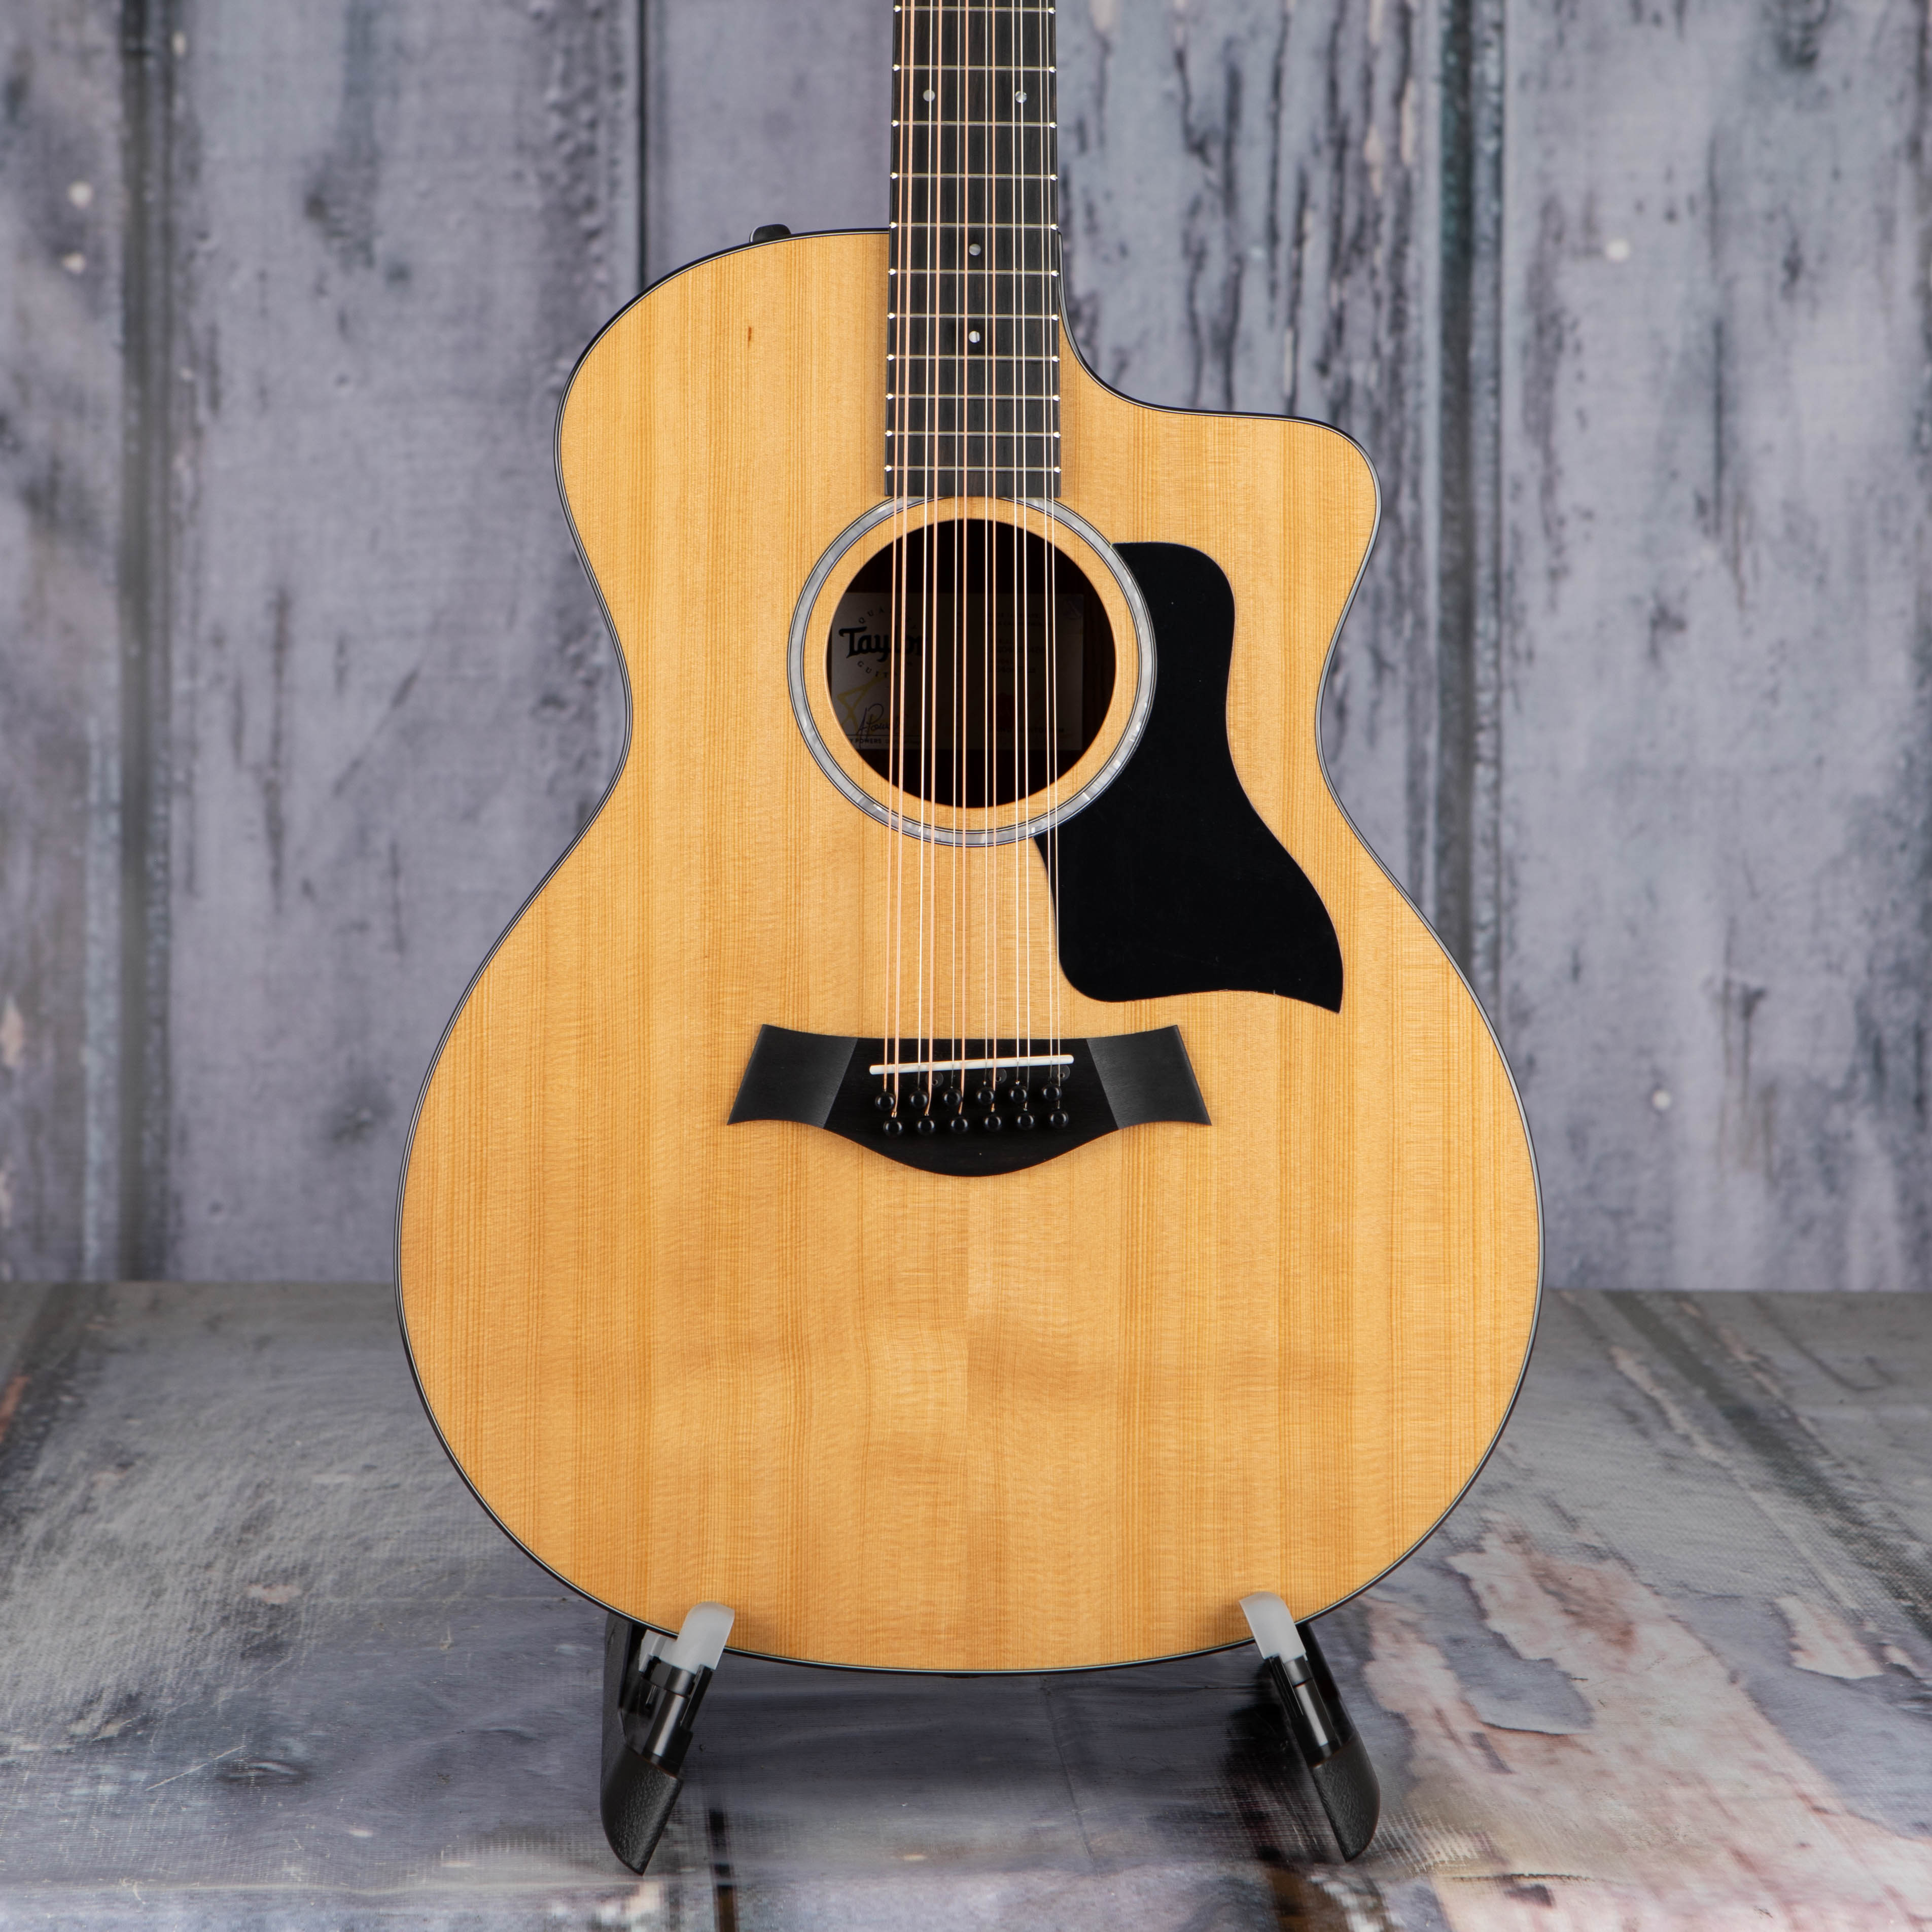 Taylor 254ce Plus 12-String Acoustic/Electric Guitar, Natural, front closeup